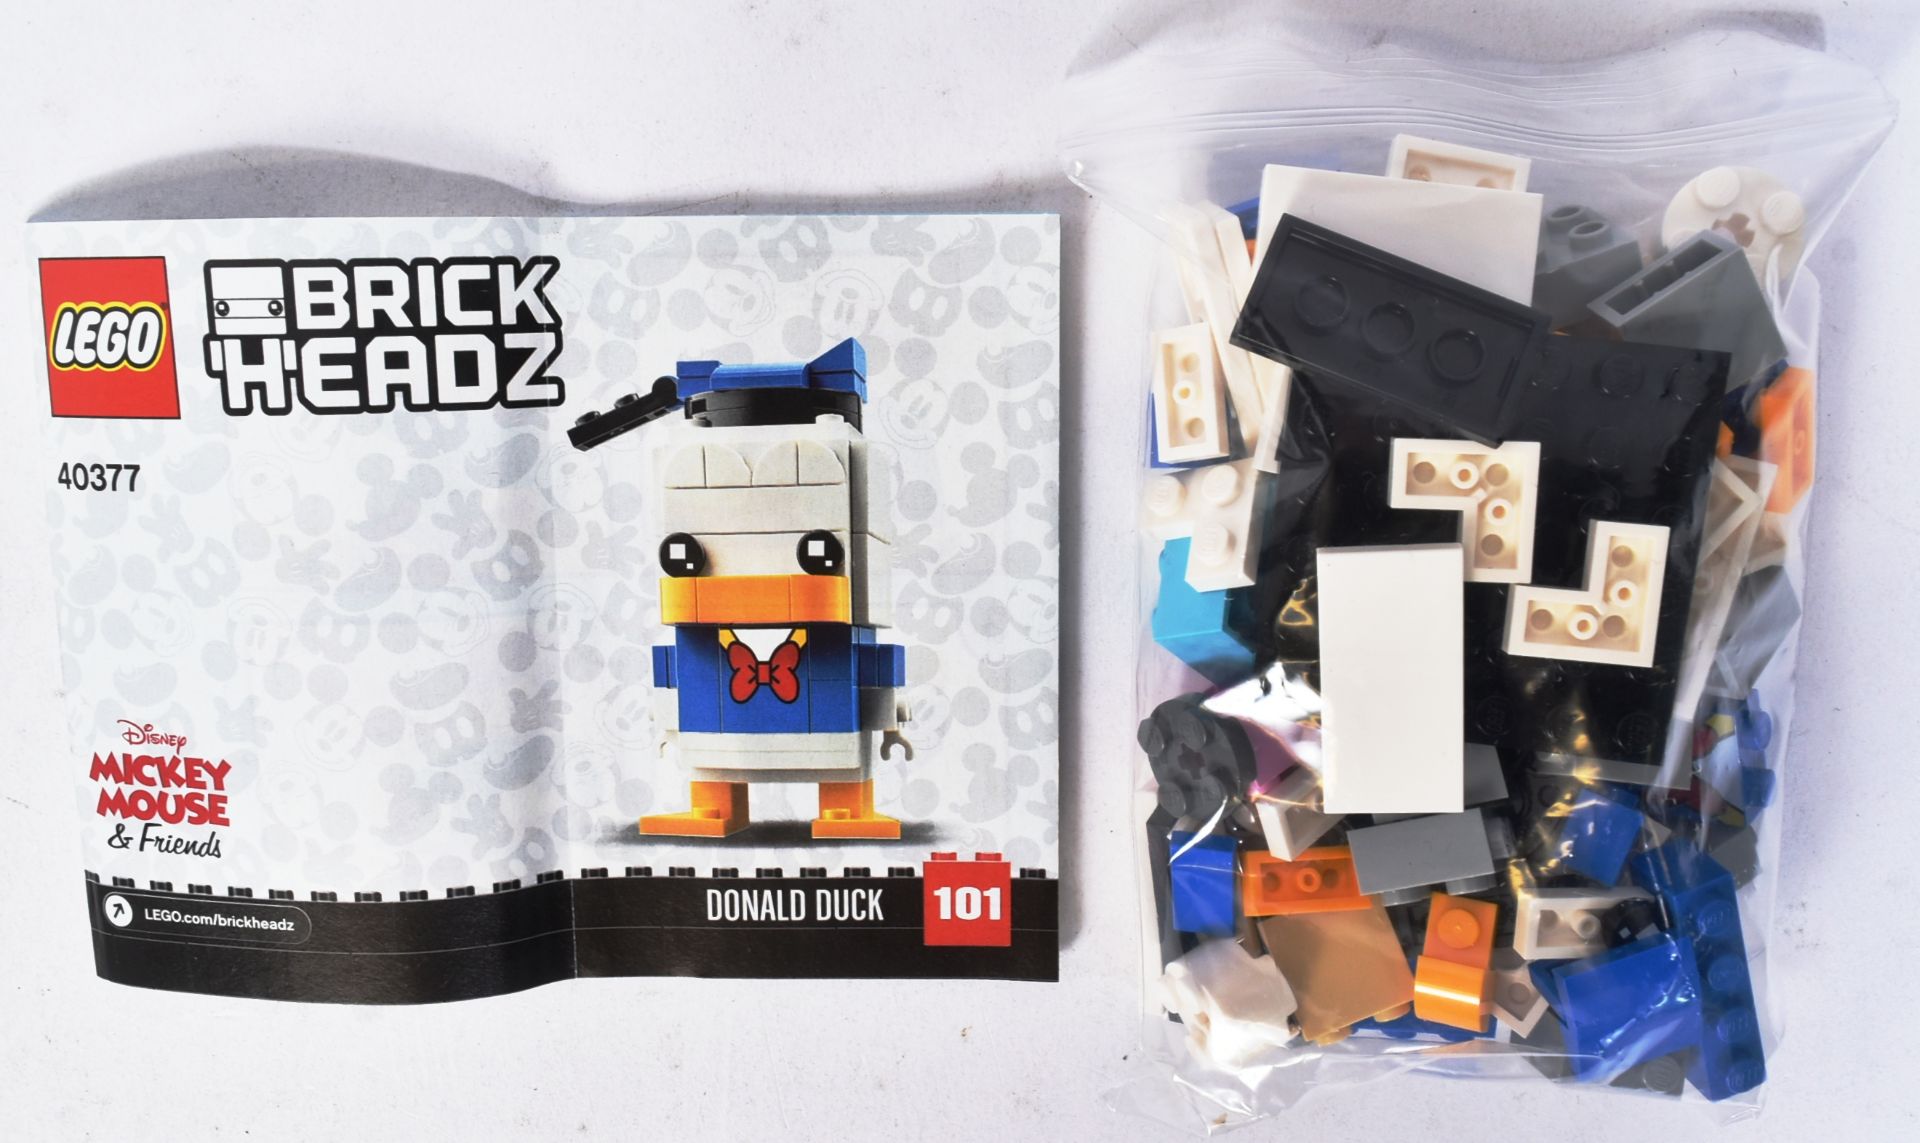 LEGO - BRICKHEADZ - DONALD DUCK, PLUTO & GOOFY - Image 2 of 3